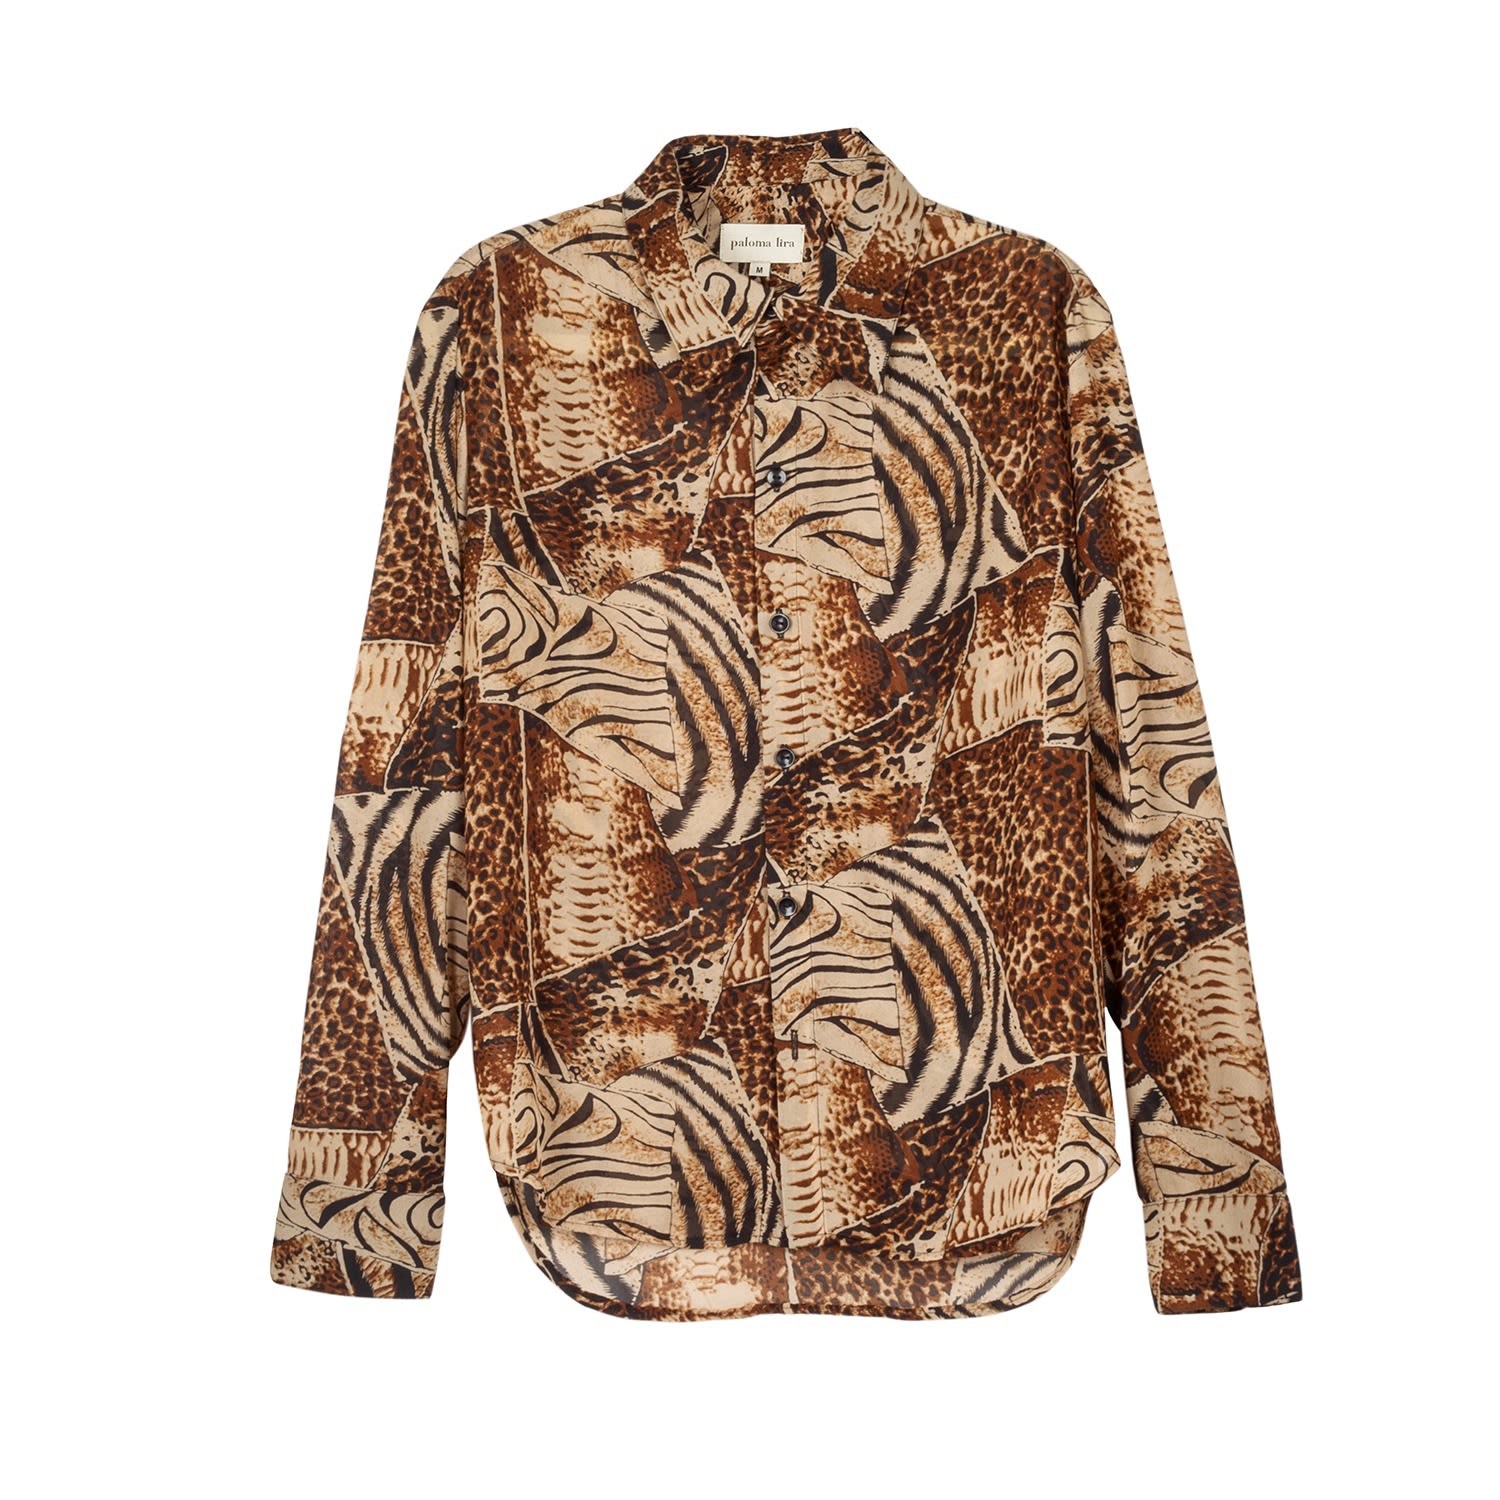 Men’s Brown Tiger Shirt Extra Large Paloma Lira